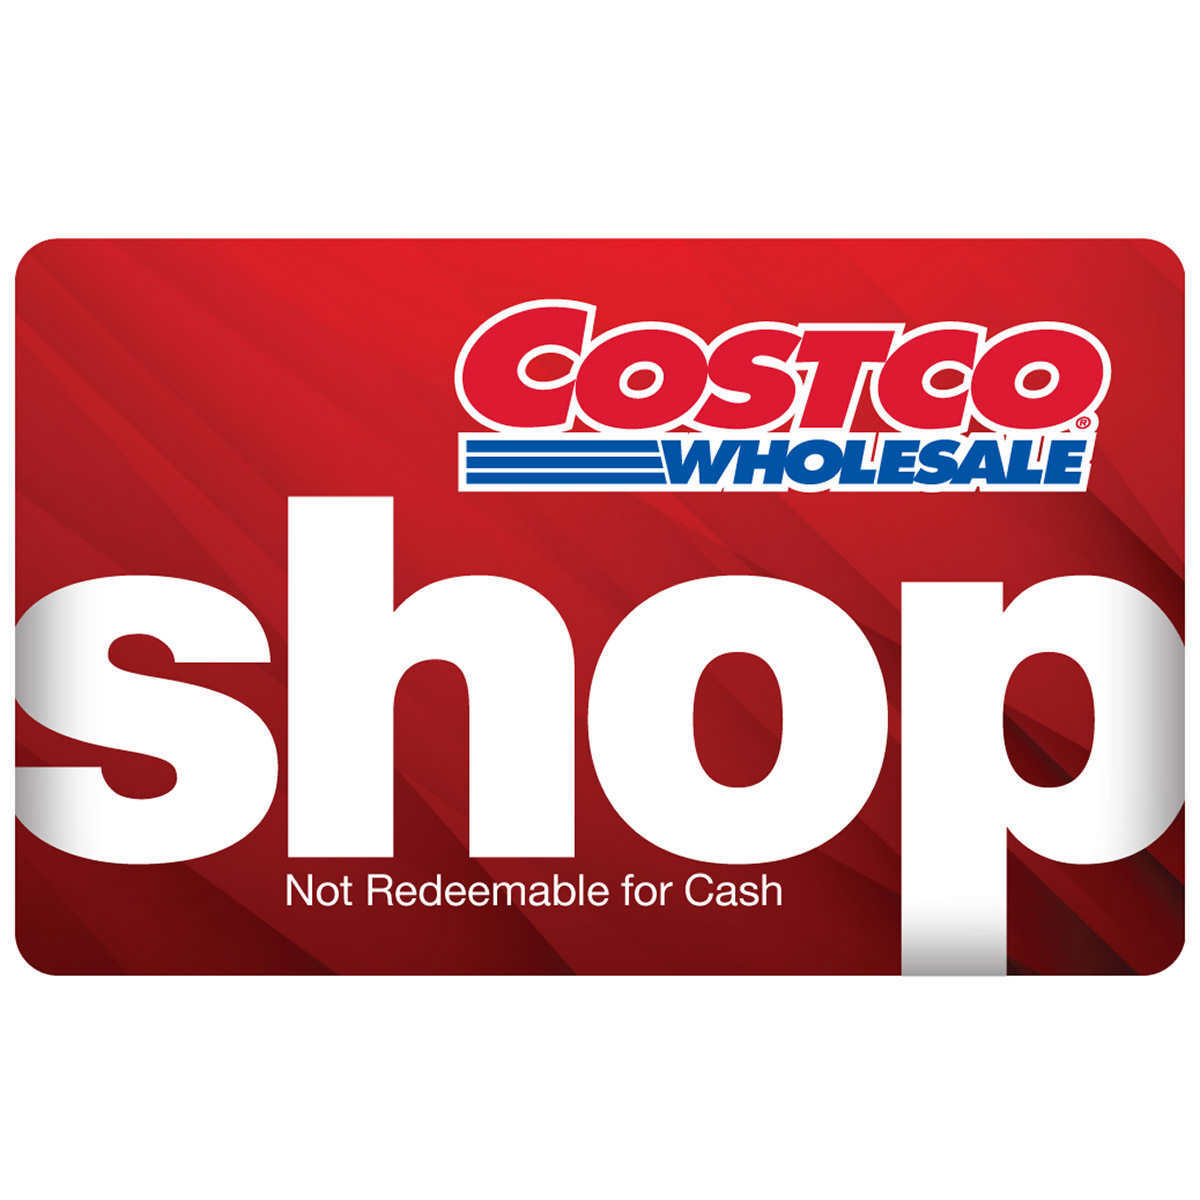 Costco Summer Exclusive Deal (FREE MEMBERSHIP)